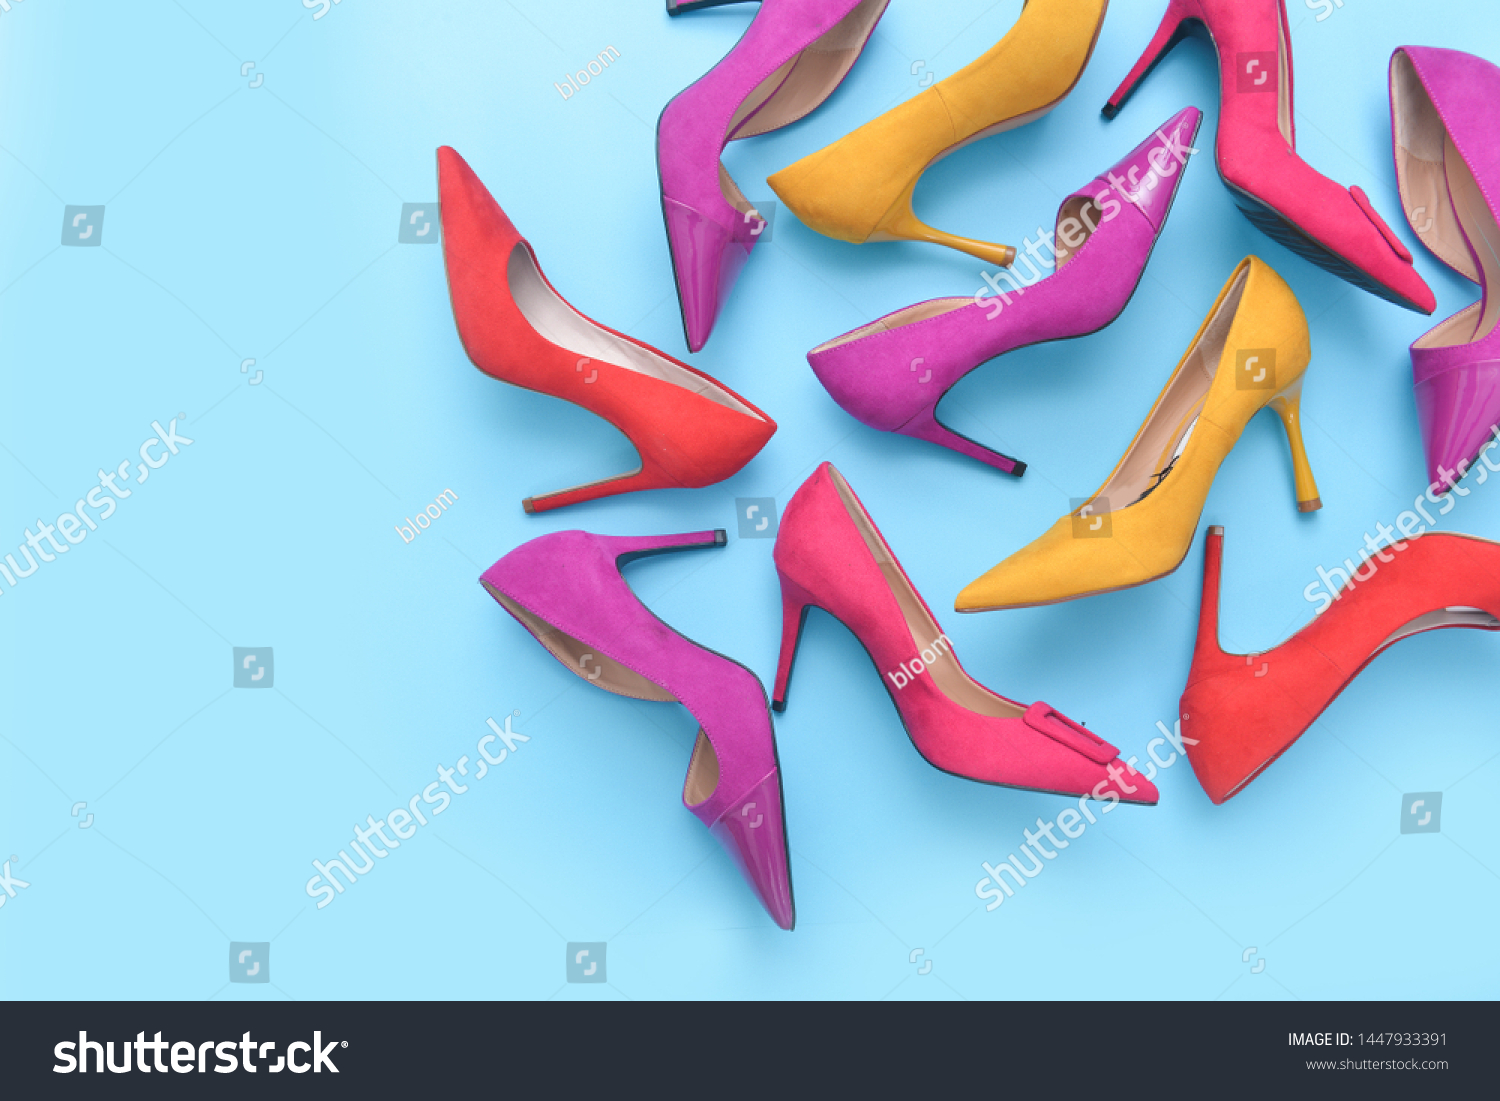 cee rose share pile of high heels photos